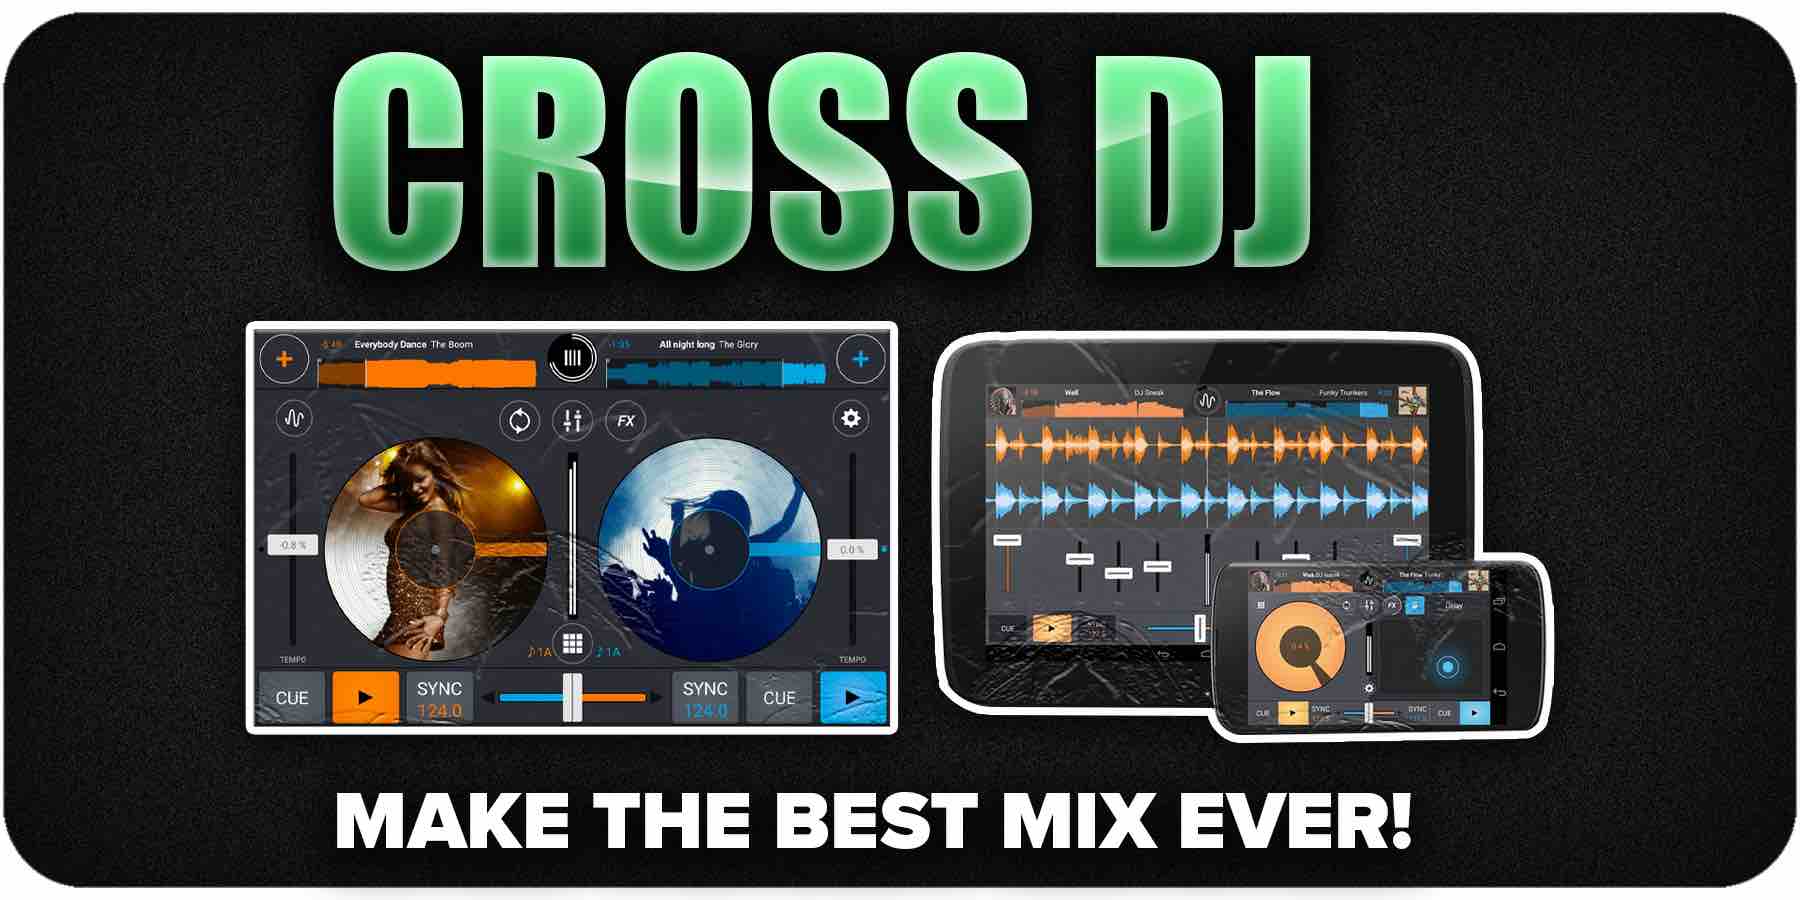 Cross DJ Mixing Software